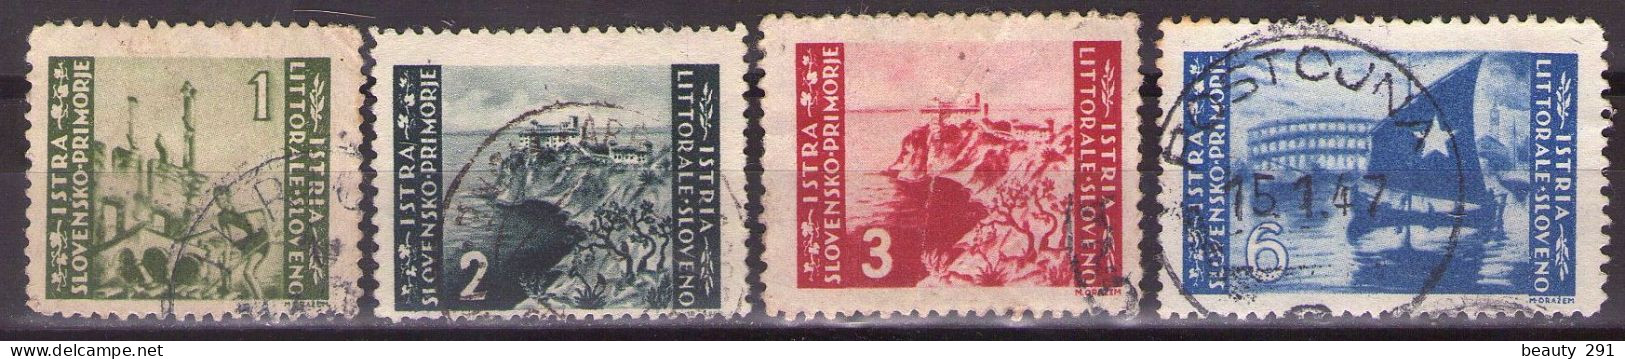 ISTRIA E LITORALE SLOVENO 1946. Tiratura Di Belgrado, Dent. 11-1/2, Sass. 63-66 USED - Yugoslavian Occ.: Slovenian Shore